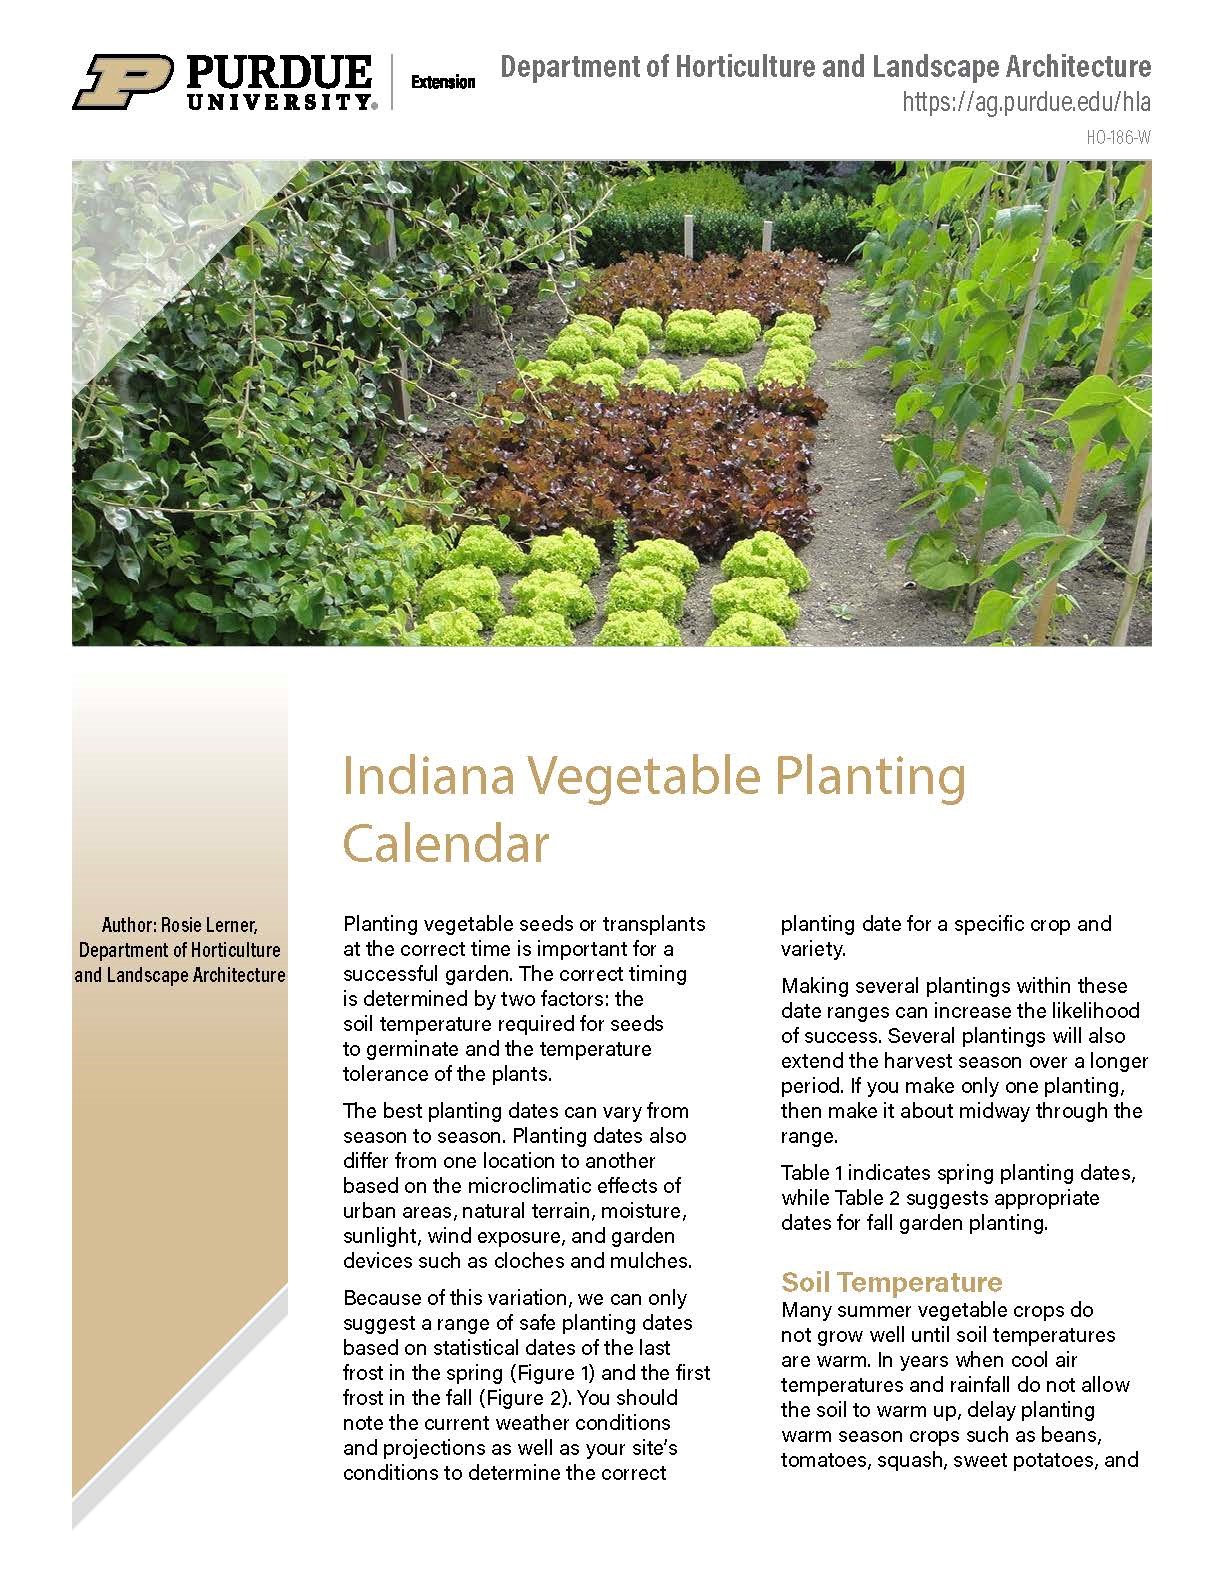 Indiana Vegetable Planting Calendar